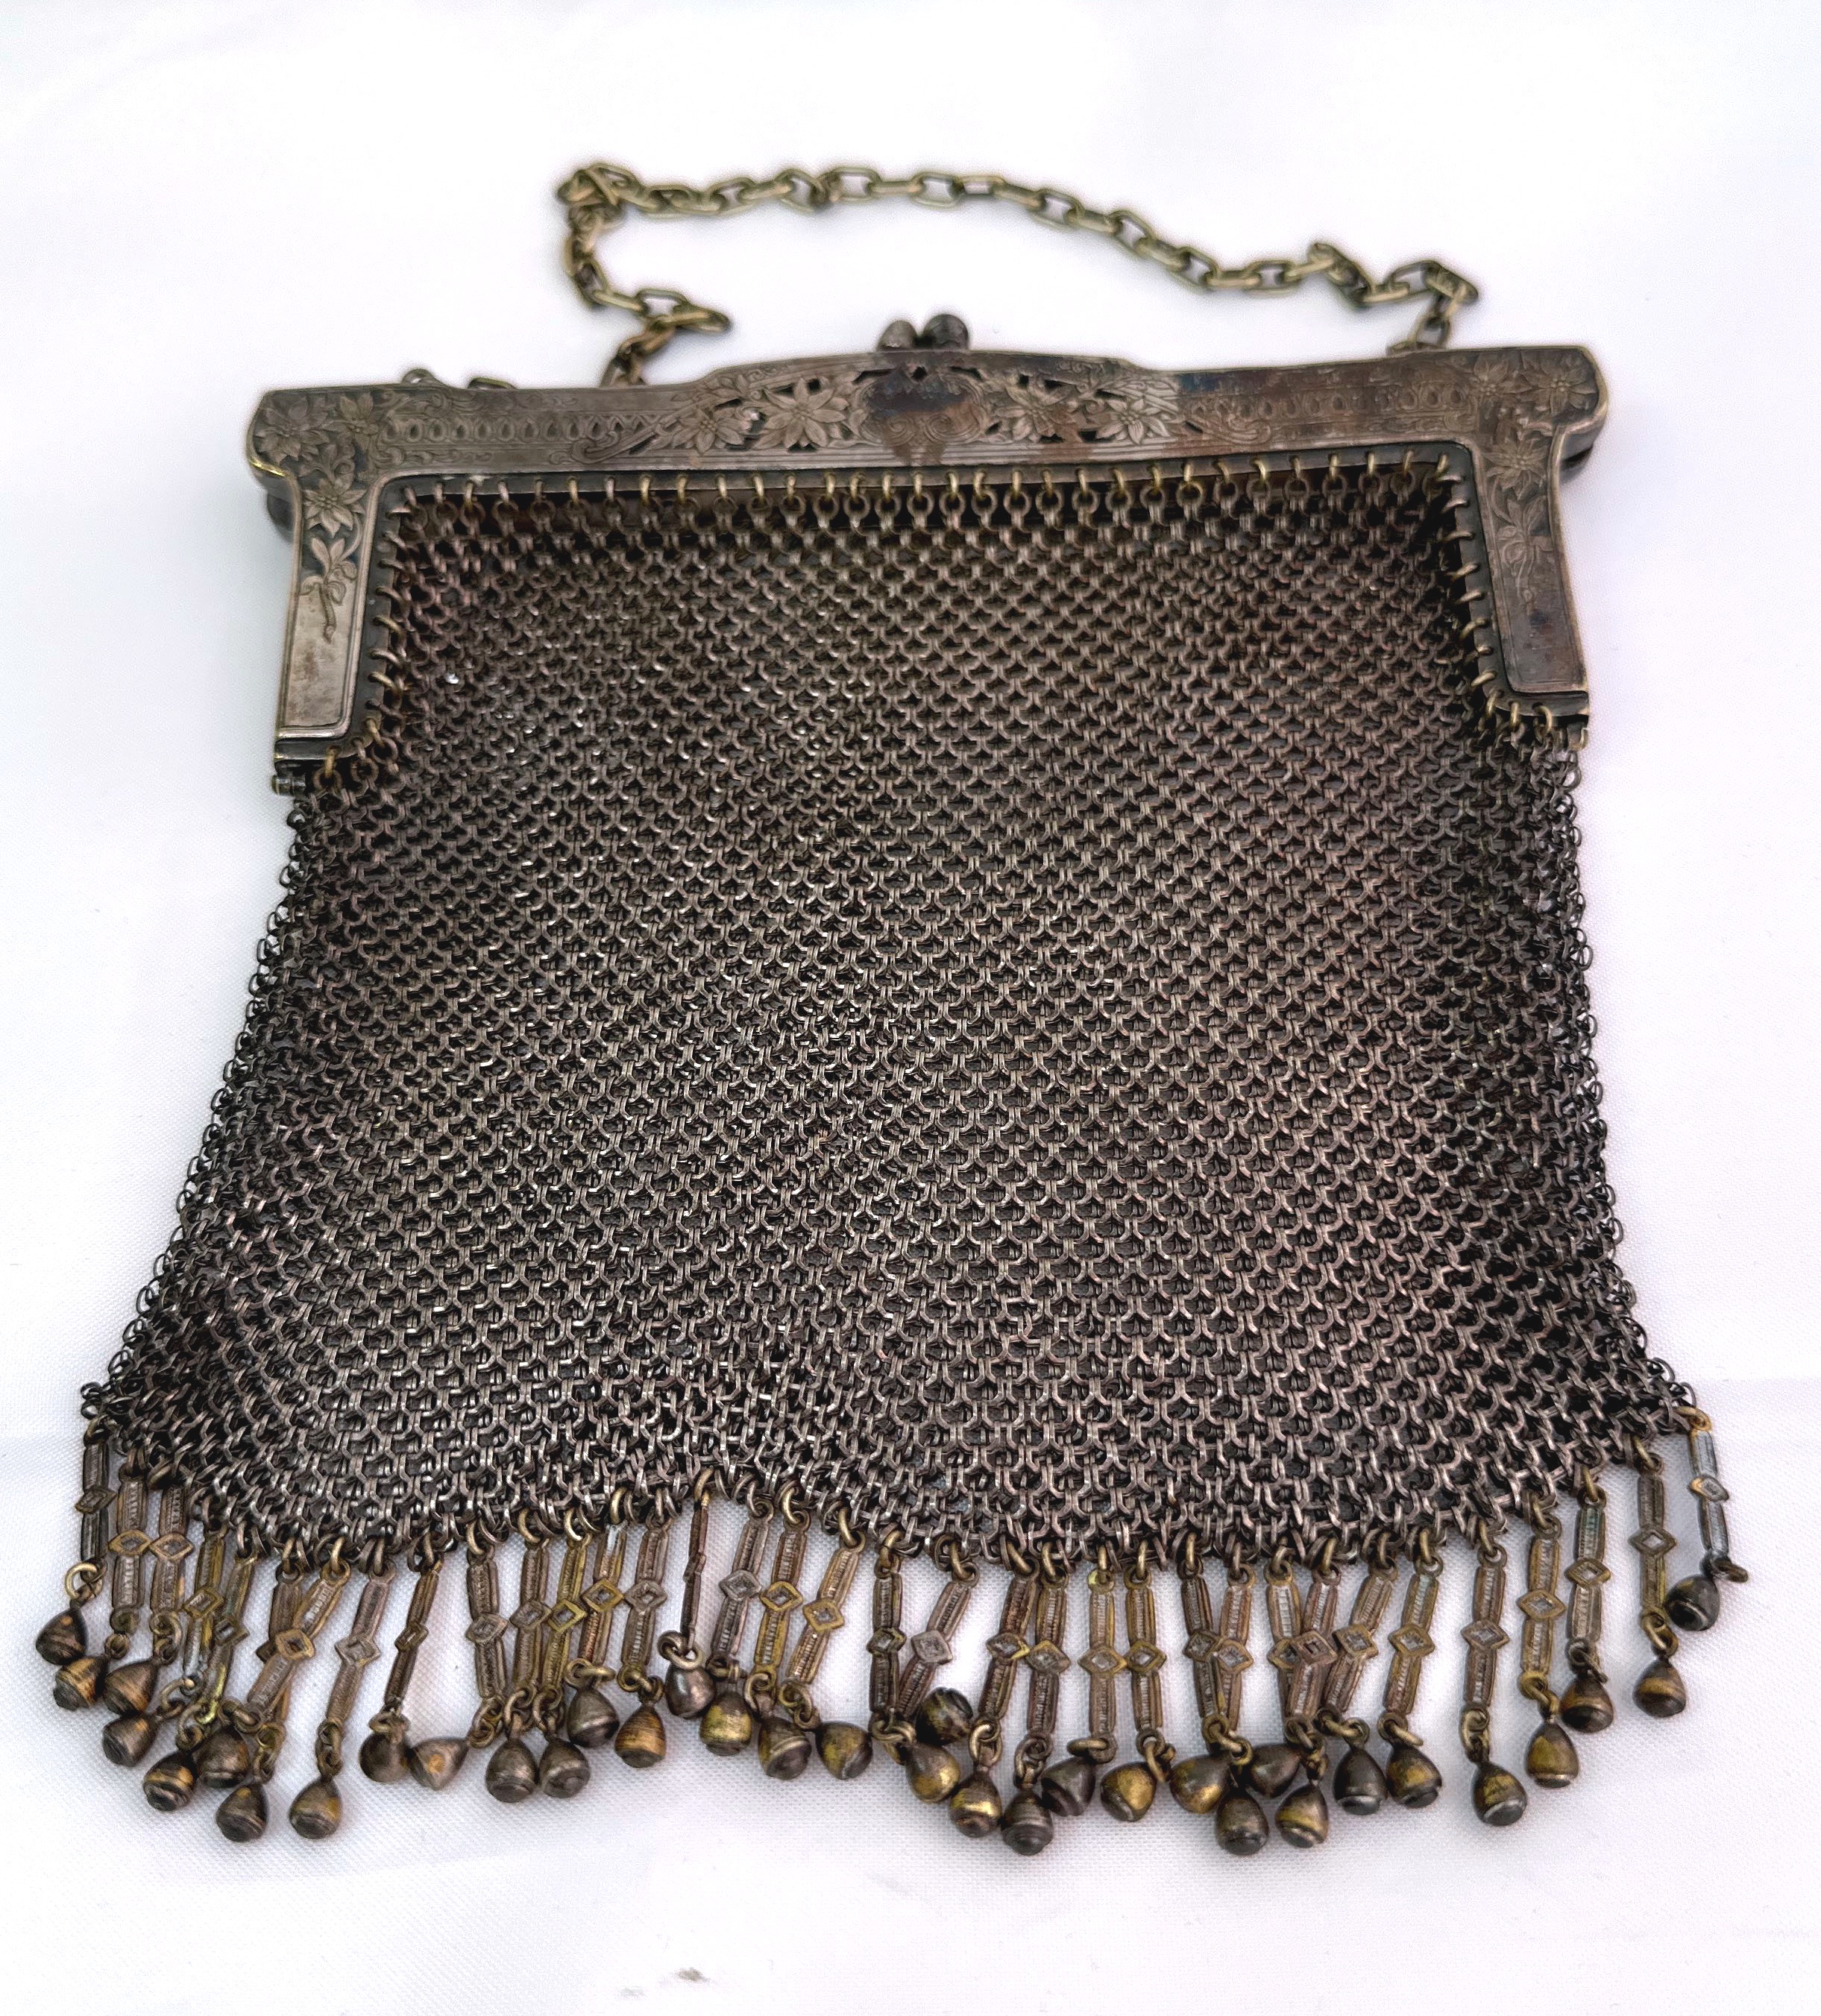 Antique Art deco silver chain purse - Bags and purses